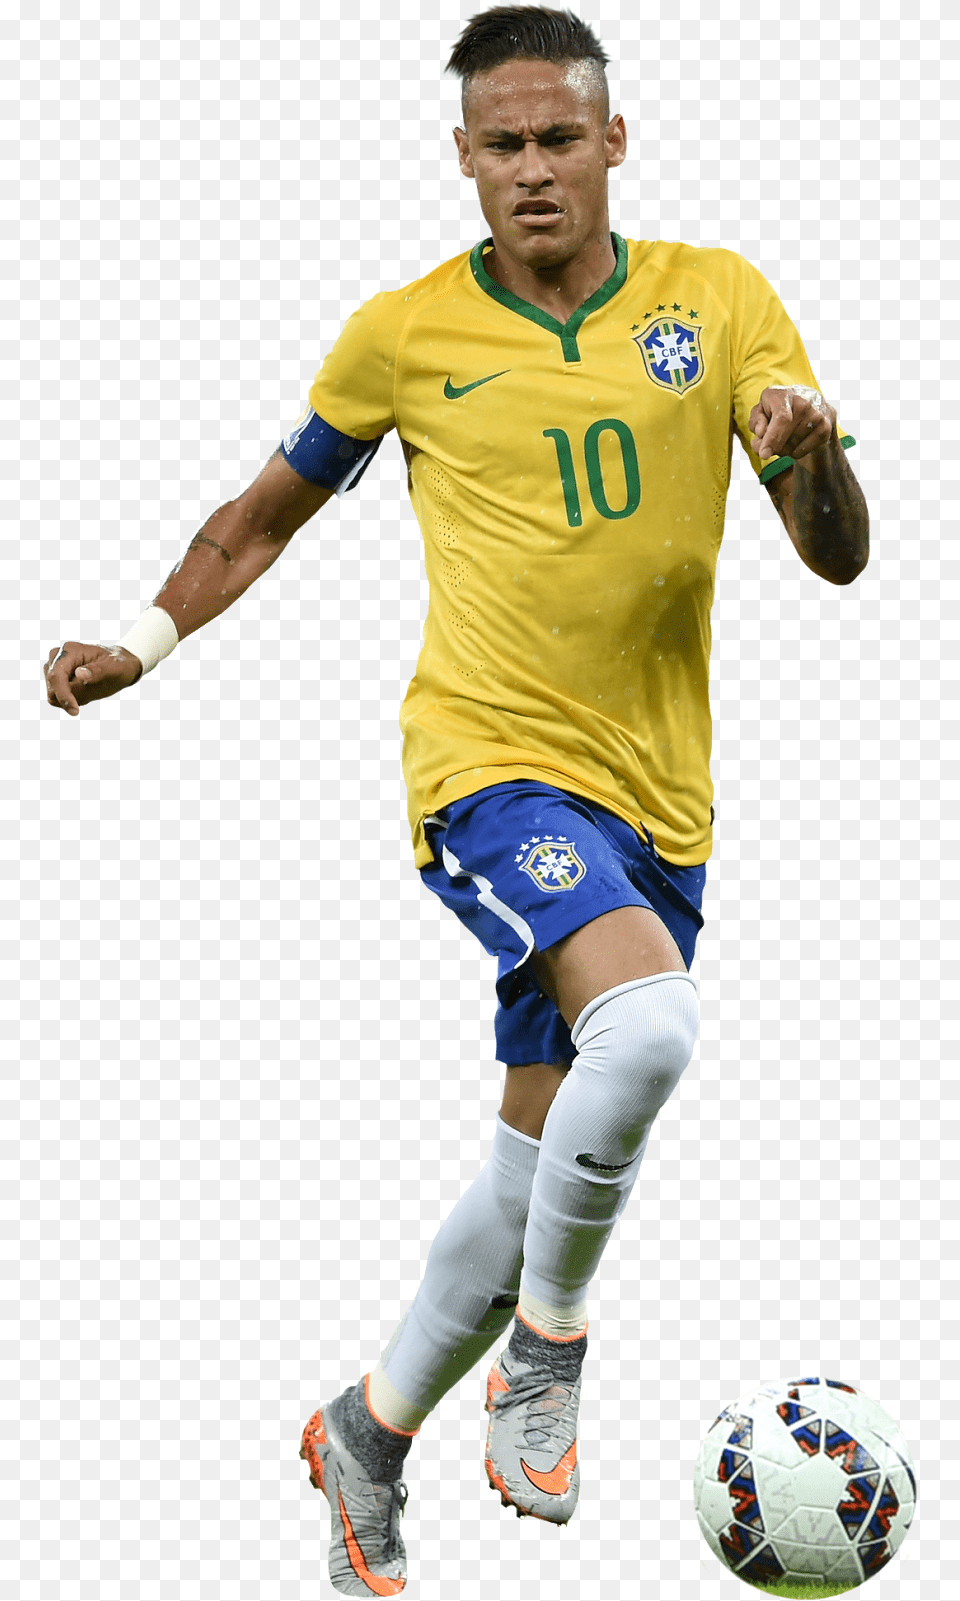 Download Neymar Football Render Neymar Brazil Background, Sphere, Ball, Soccer Ball, Soccer Free Transparent Png